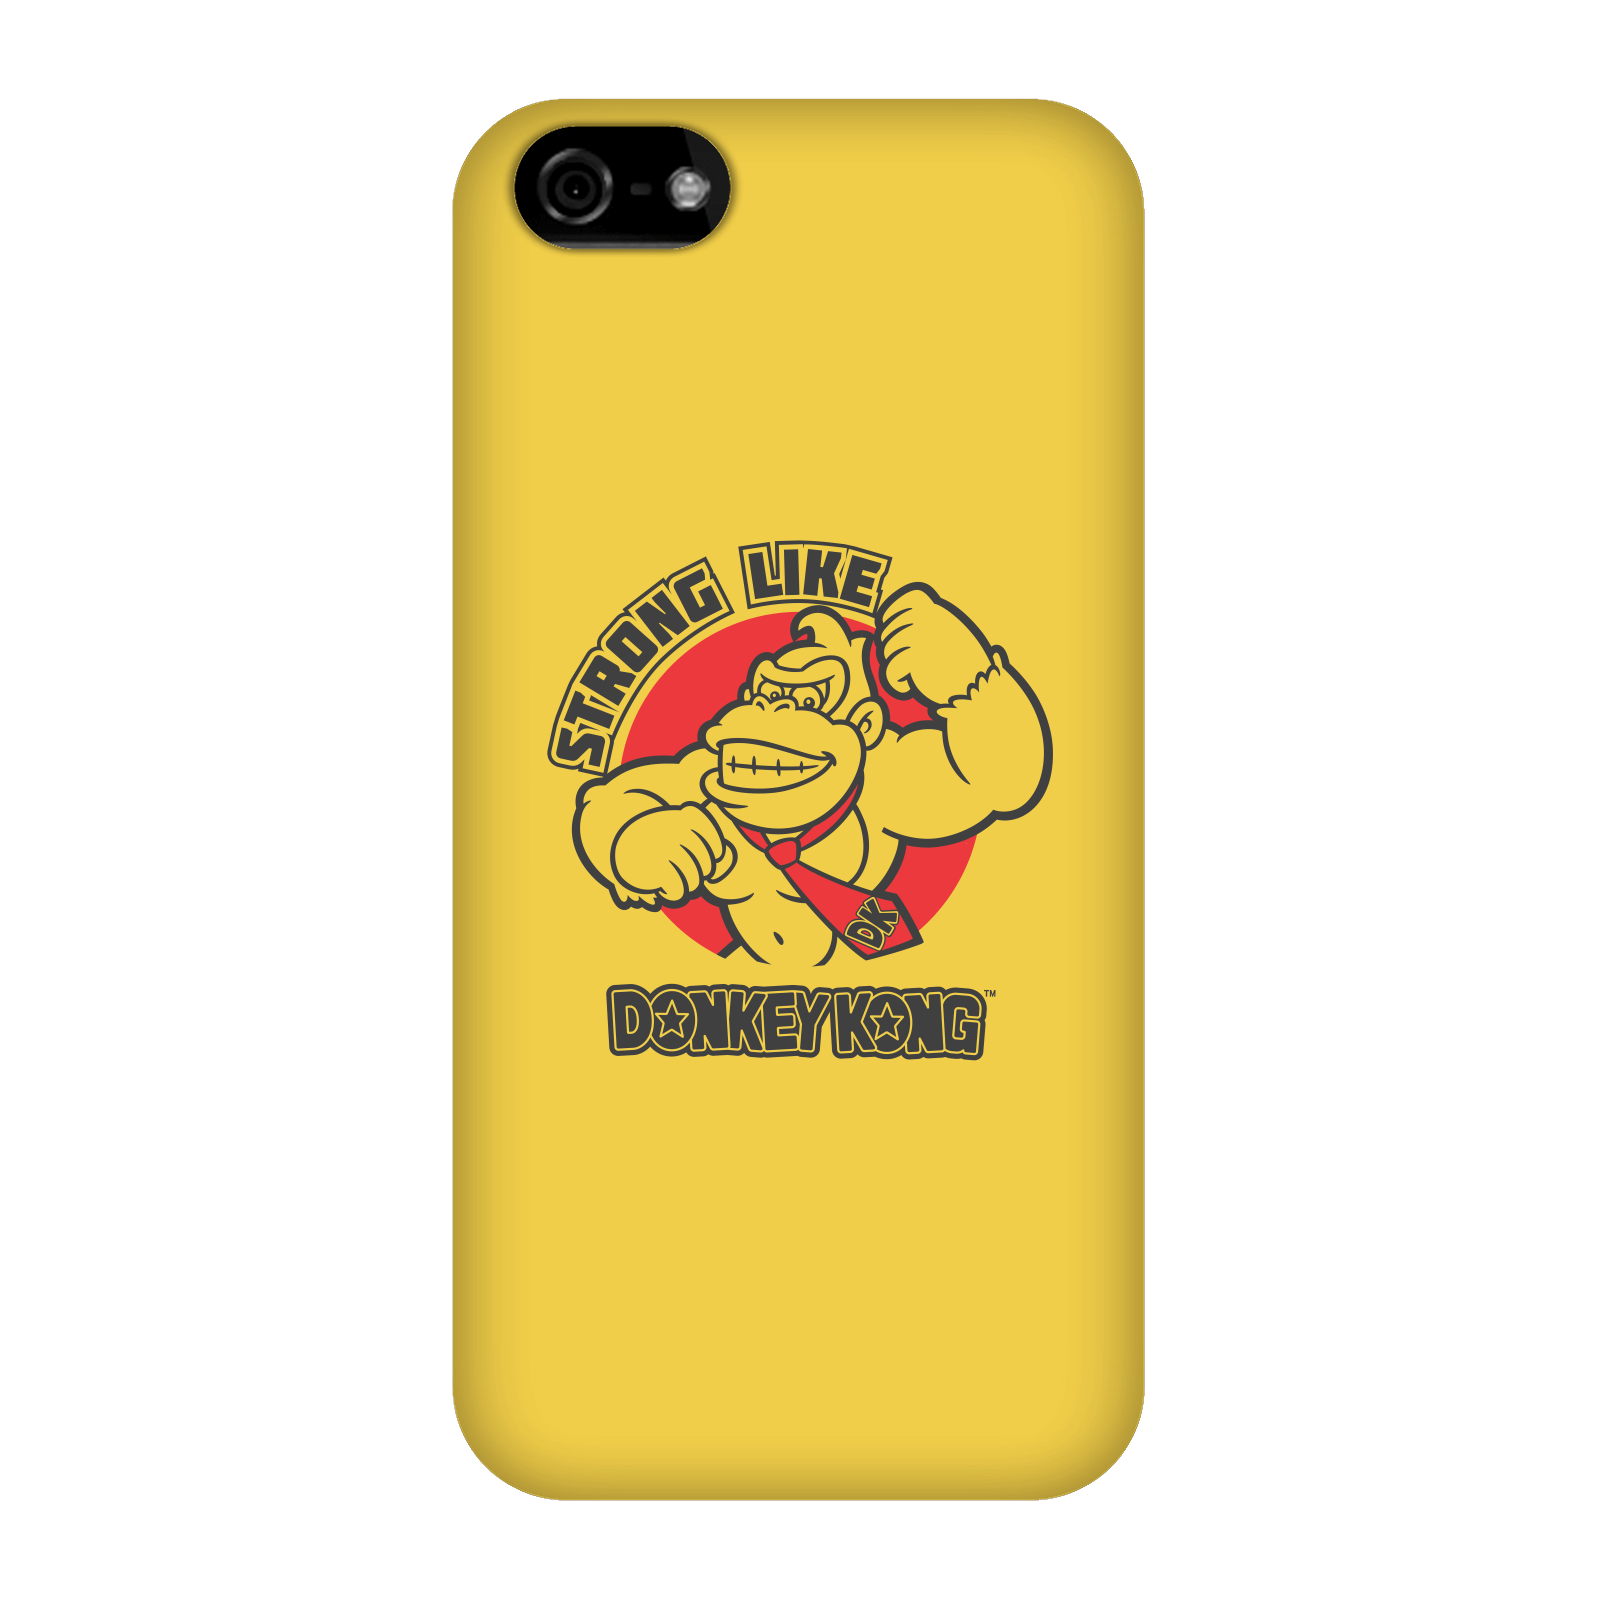 Nintendo Donkey Kong Strong Like Donkey Kong Phone Case - iPhone 5C - Snap Case - Gloss